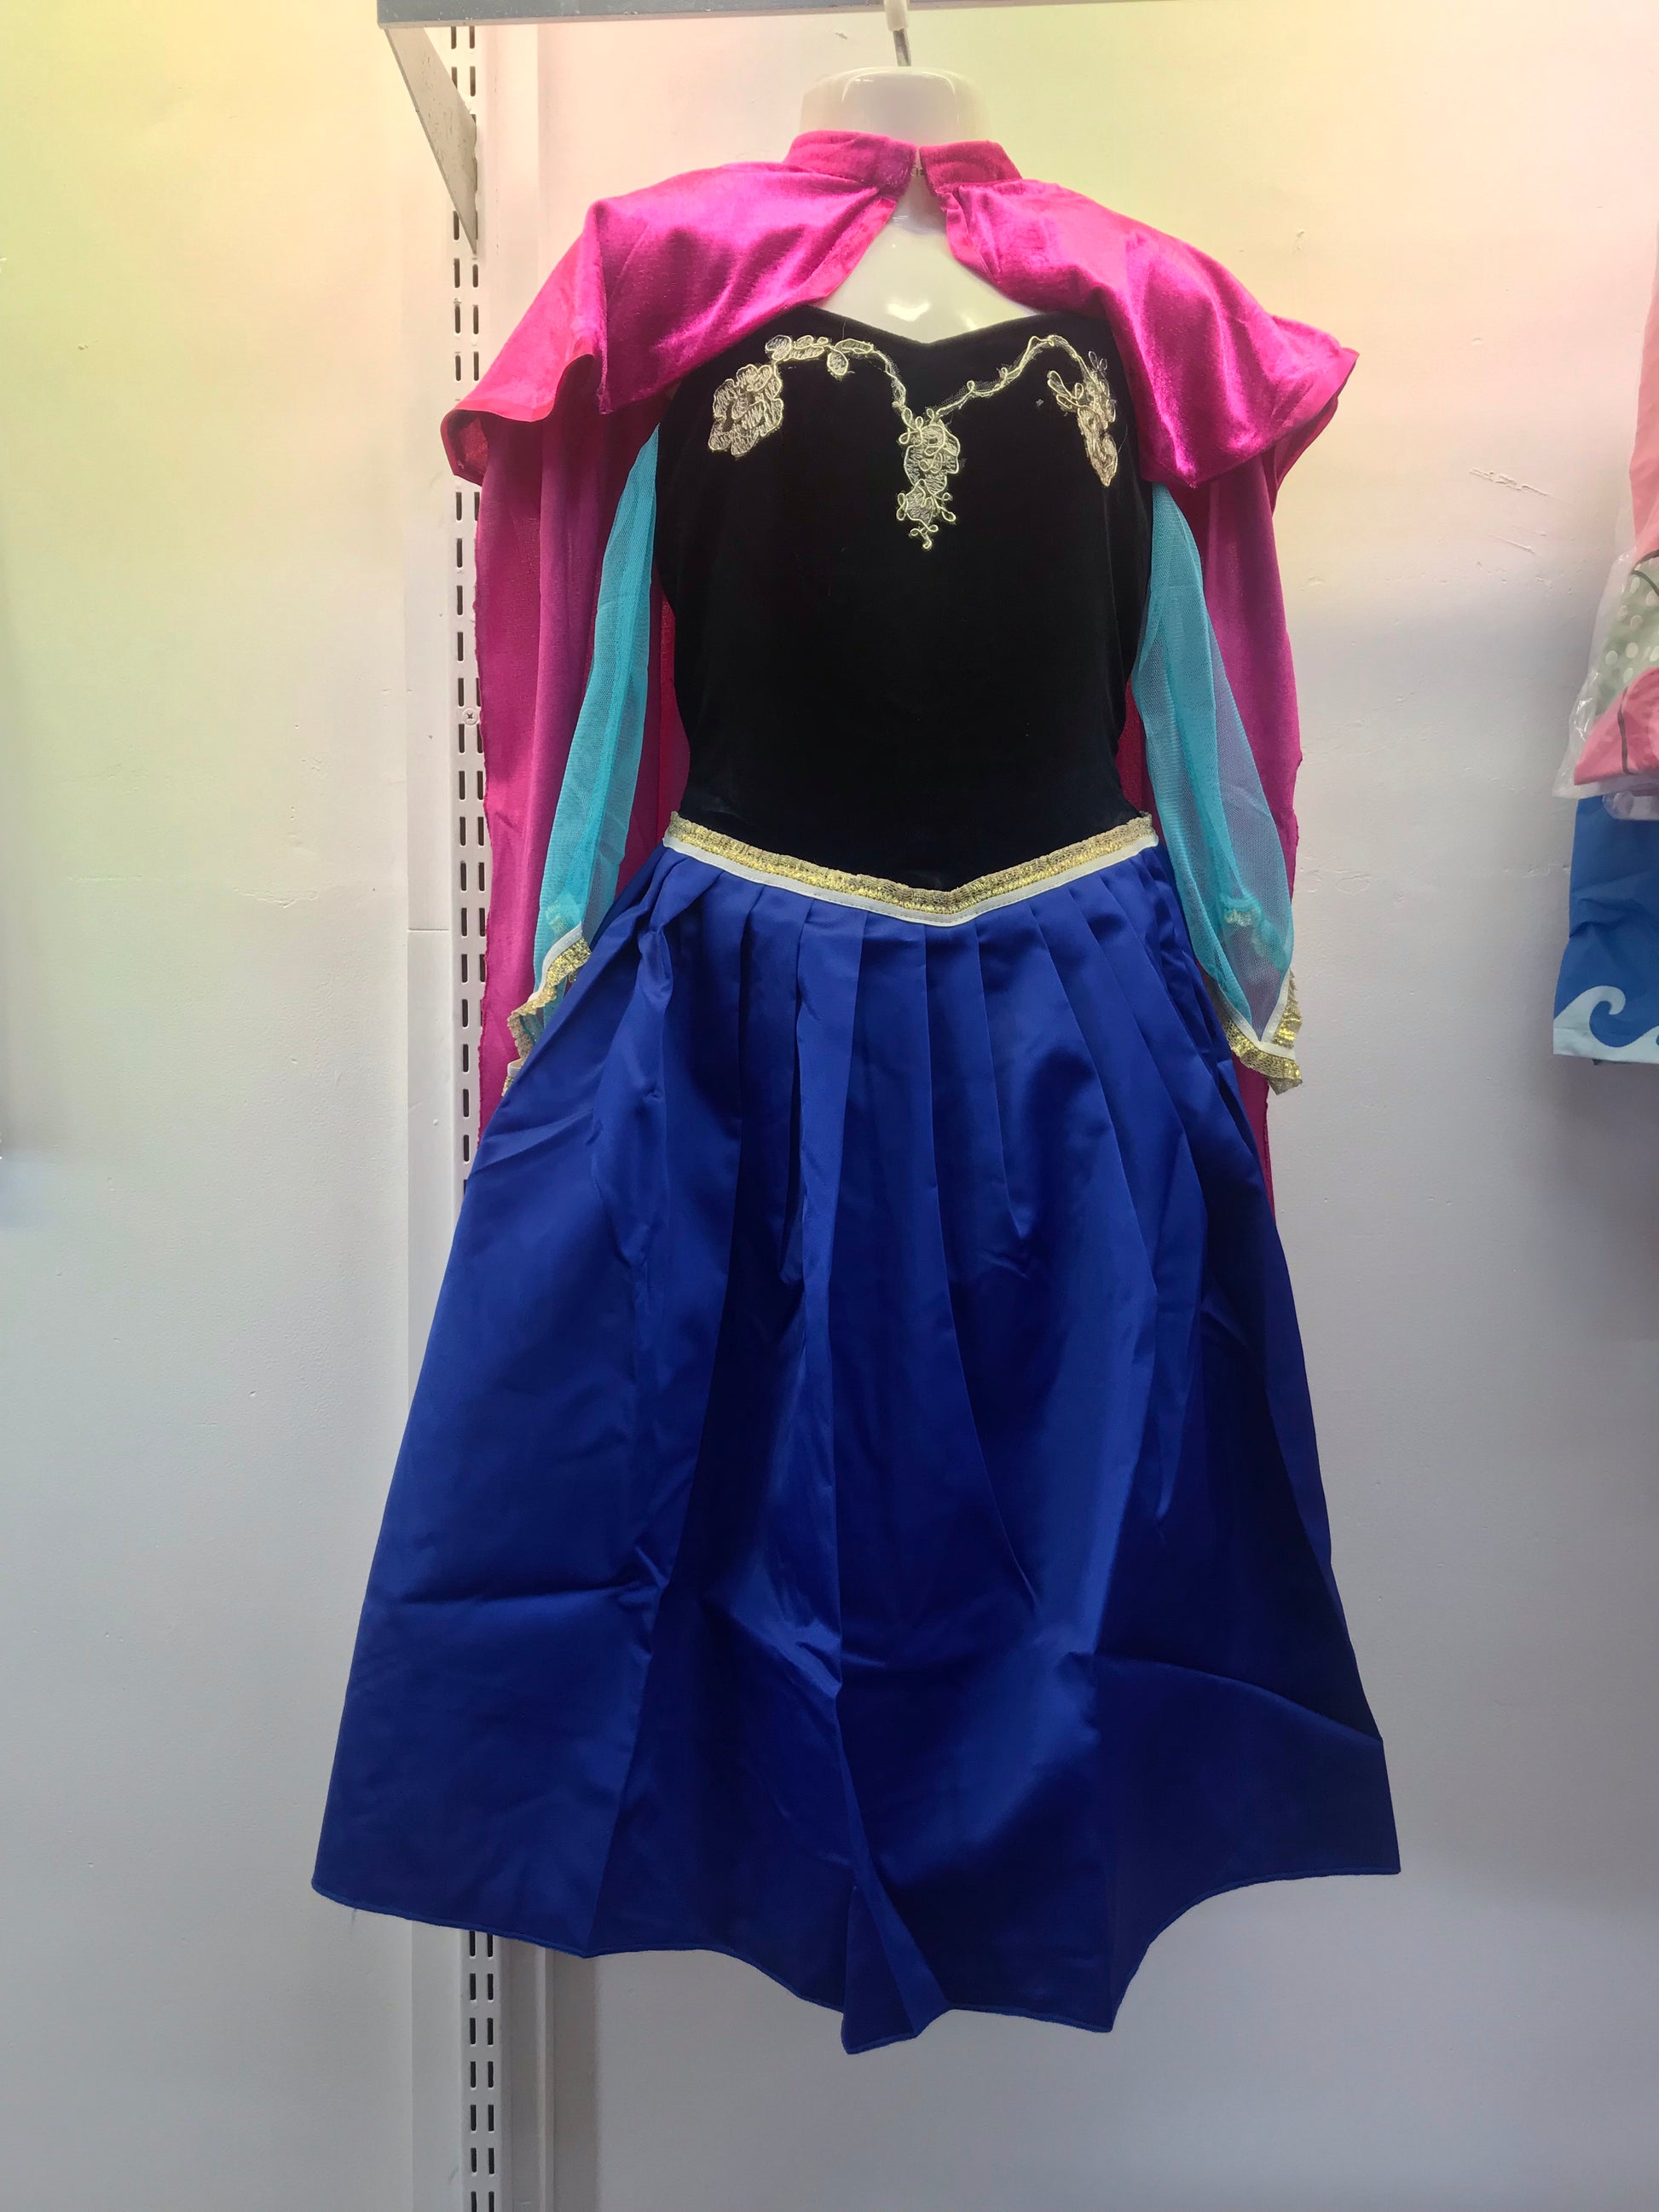 kidz-stuff-online - Frozen Dress up with cape  Anna